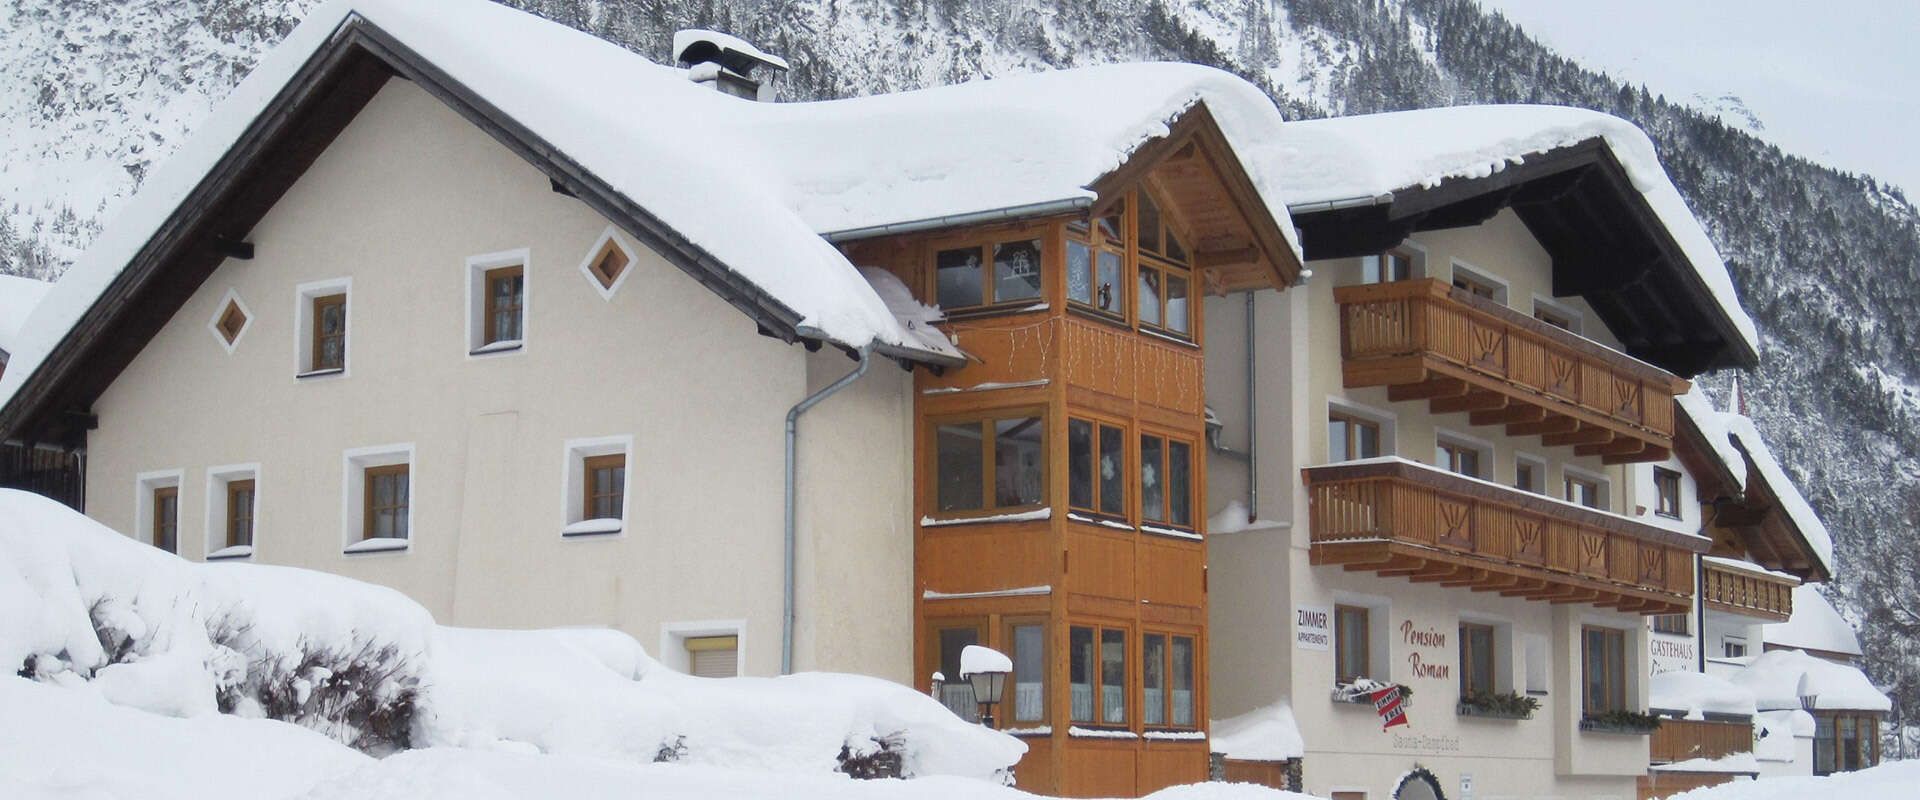 Winterurlaub in der Pension Roman am Arlberg in Tirol